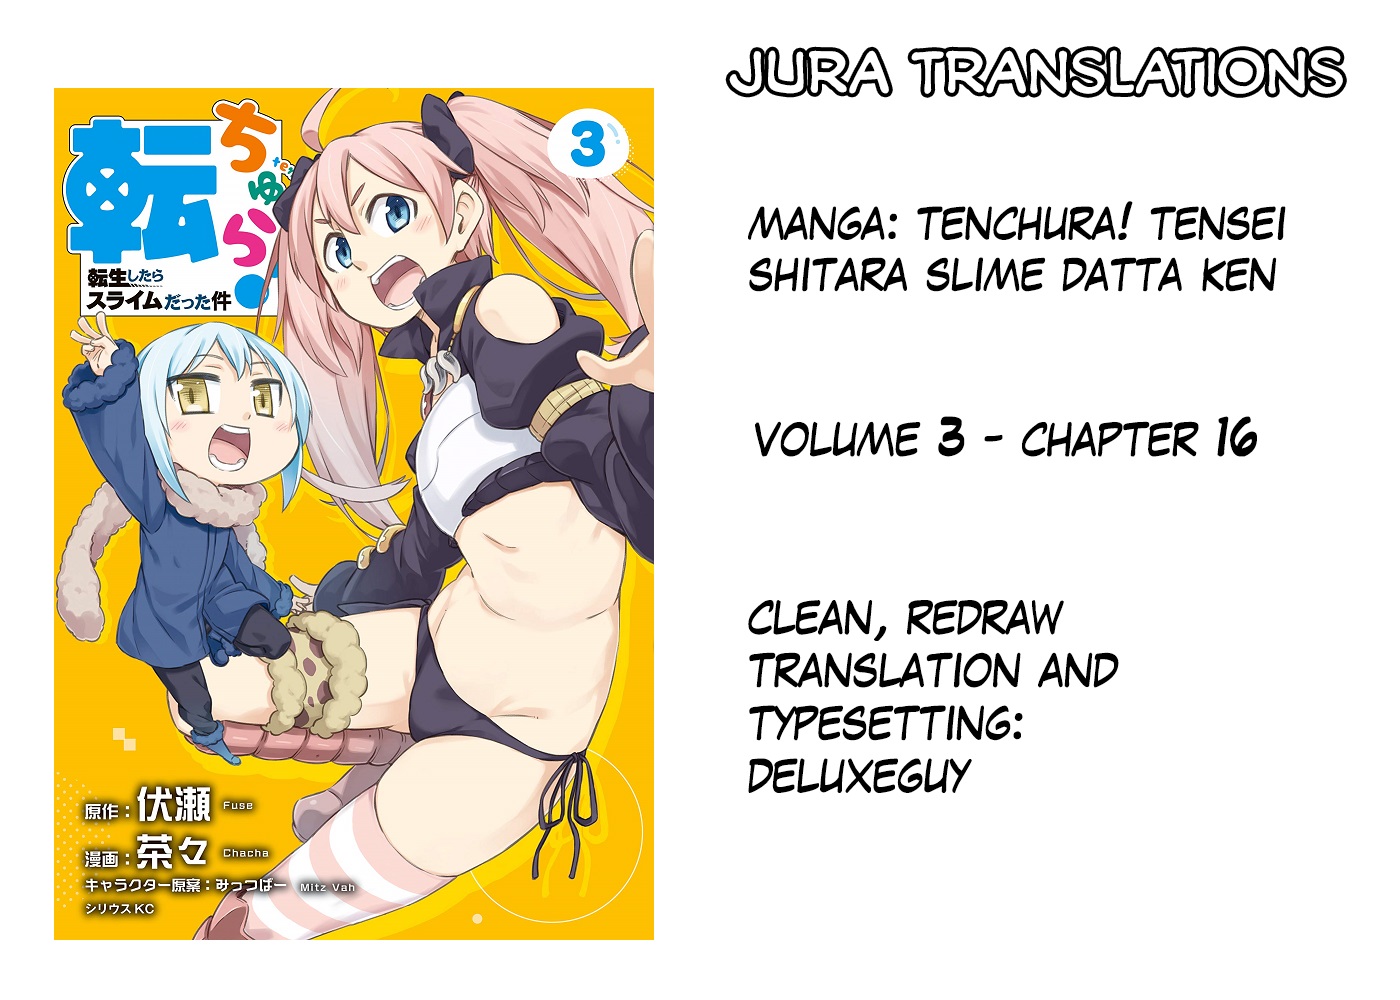 Tenchura! Tensei Shitara Slime Datta Ken Vol.3 Chapter 16